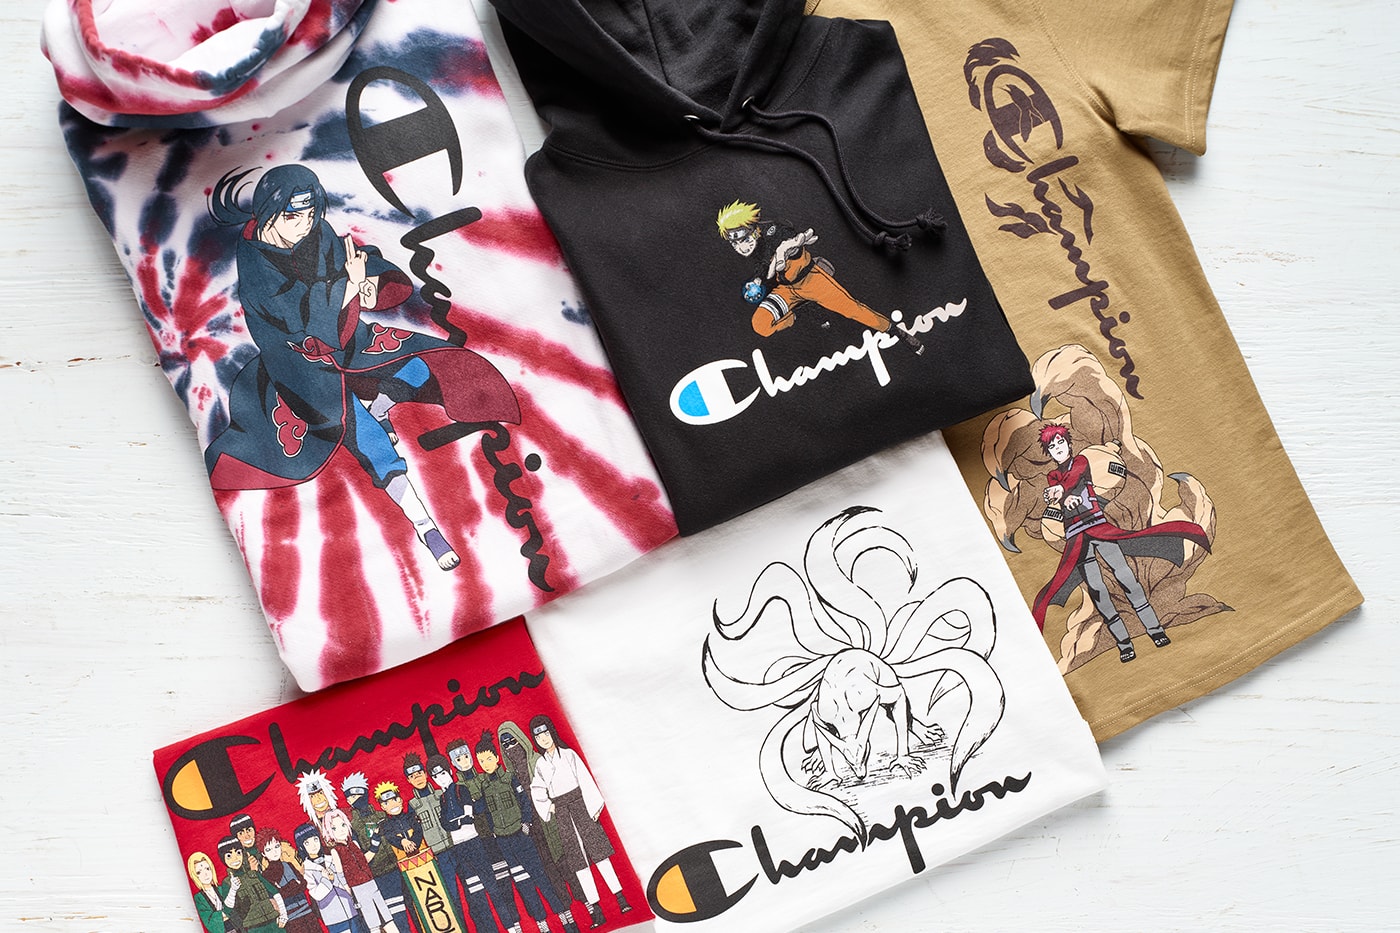 Naruto Shippuden Champion anime hoodie t-shirt gaara kakashi sakura sasuke ichigo reverse weave heritage release drop info date available online 